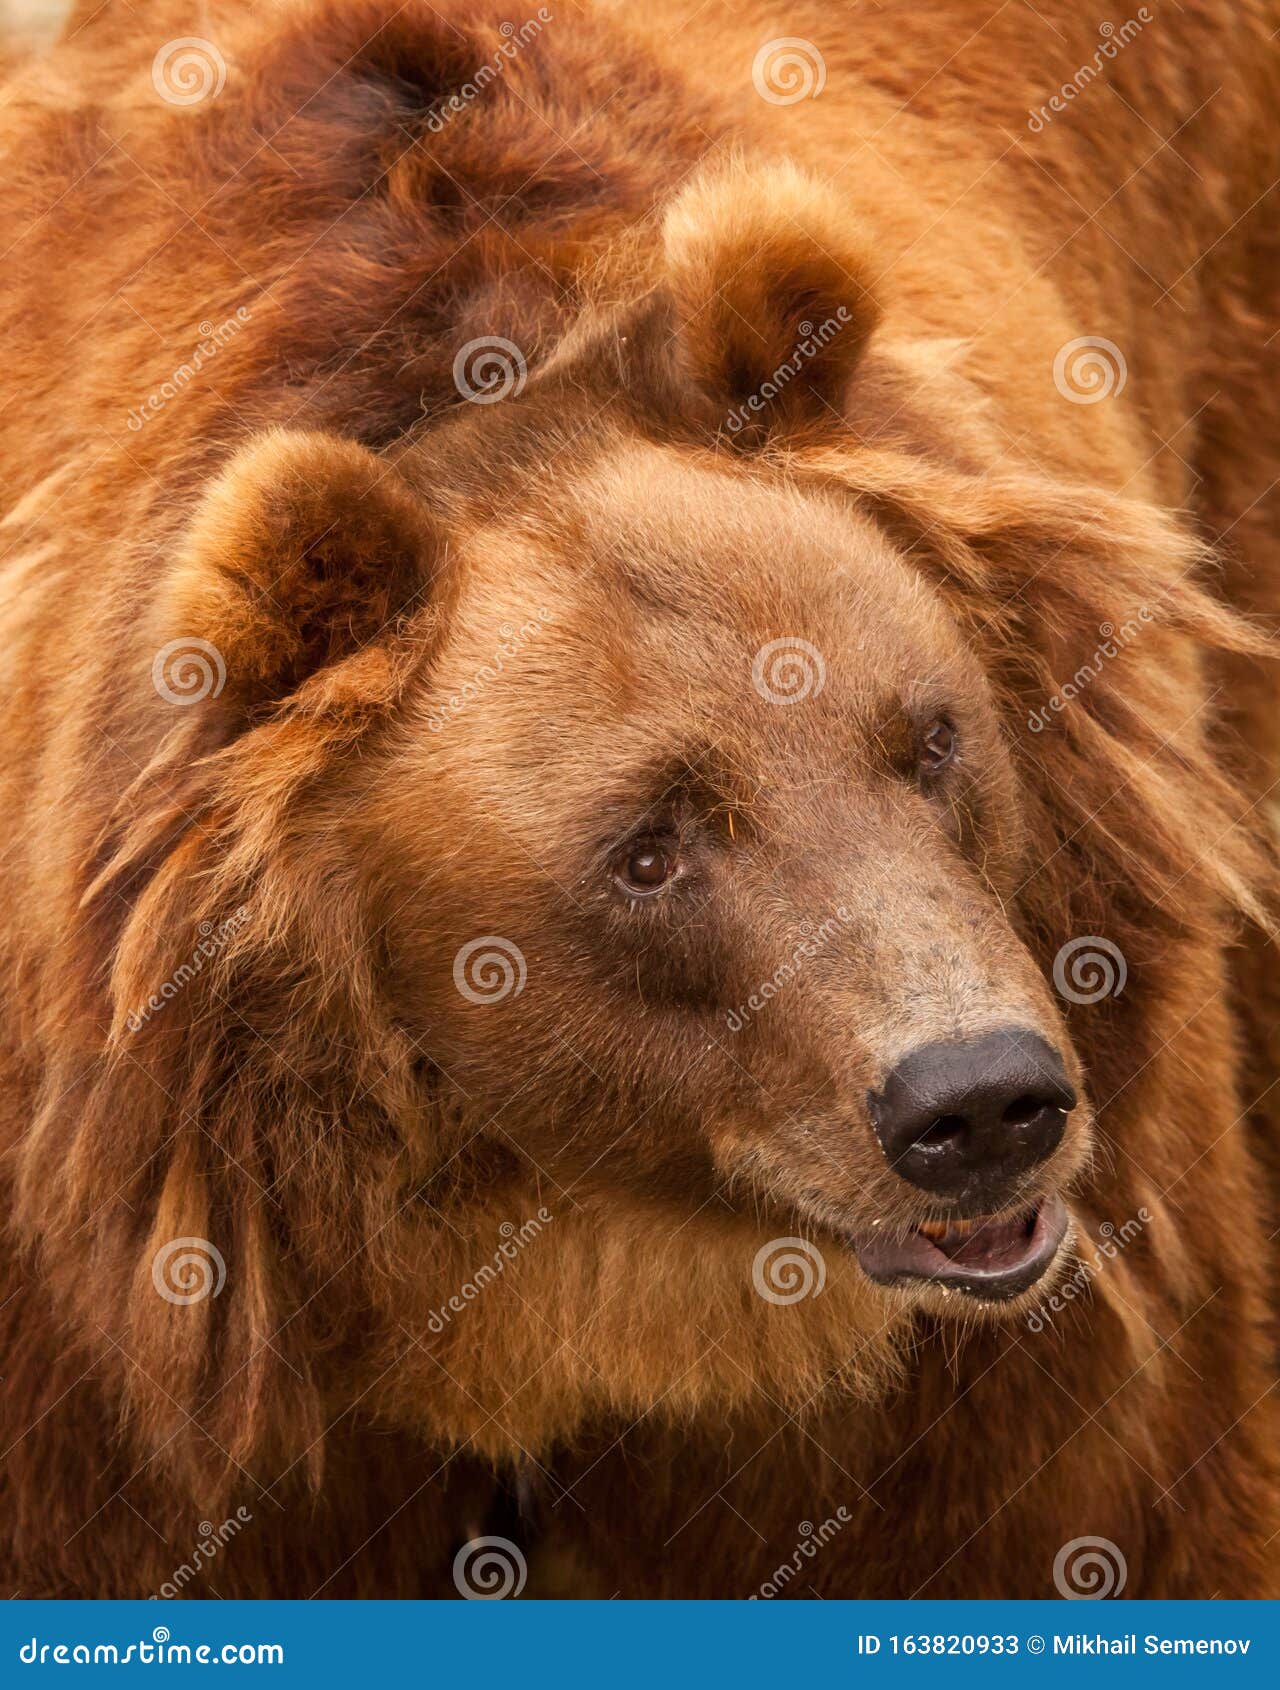 Hairy bear big The Big